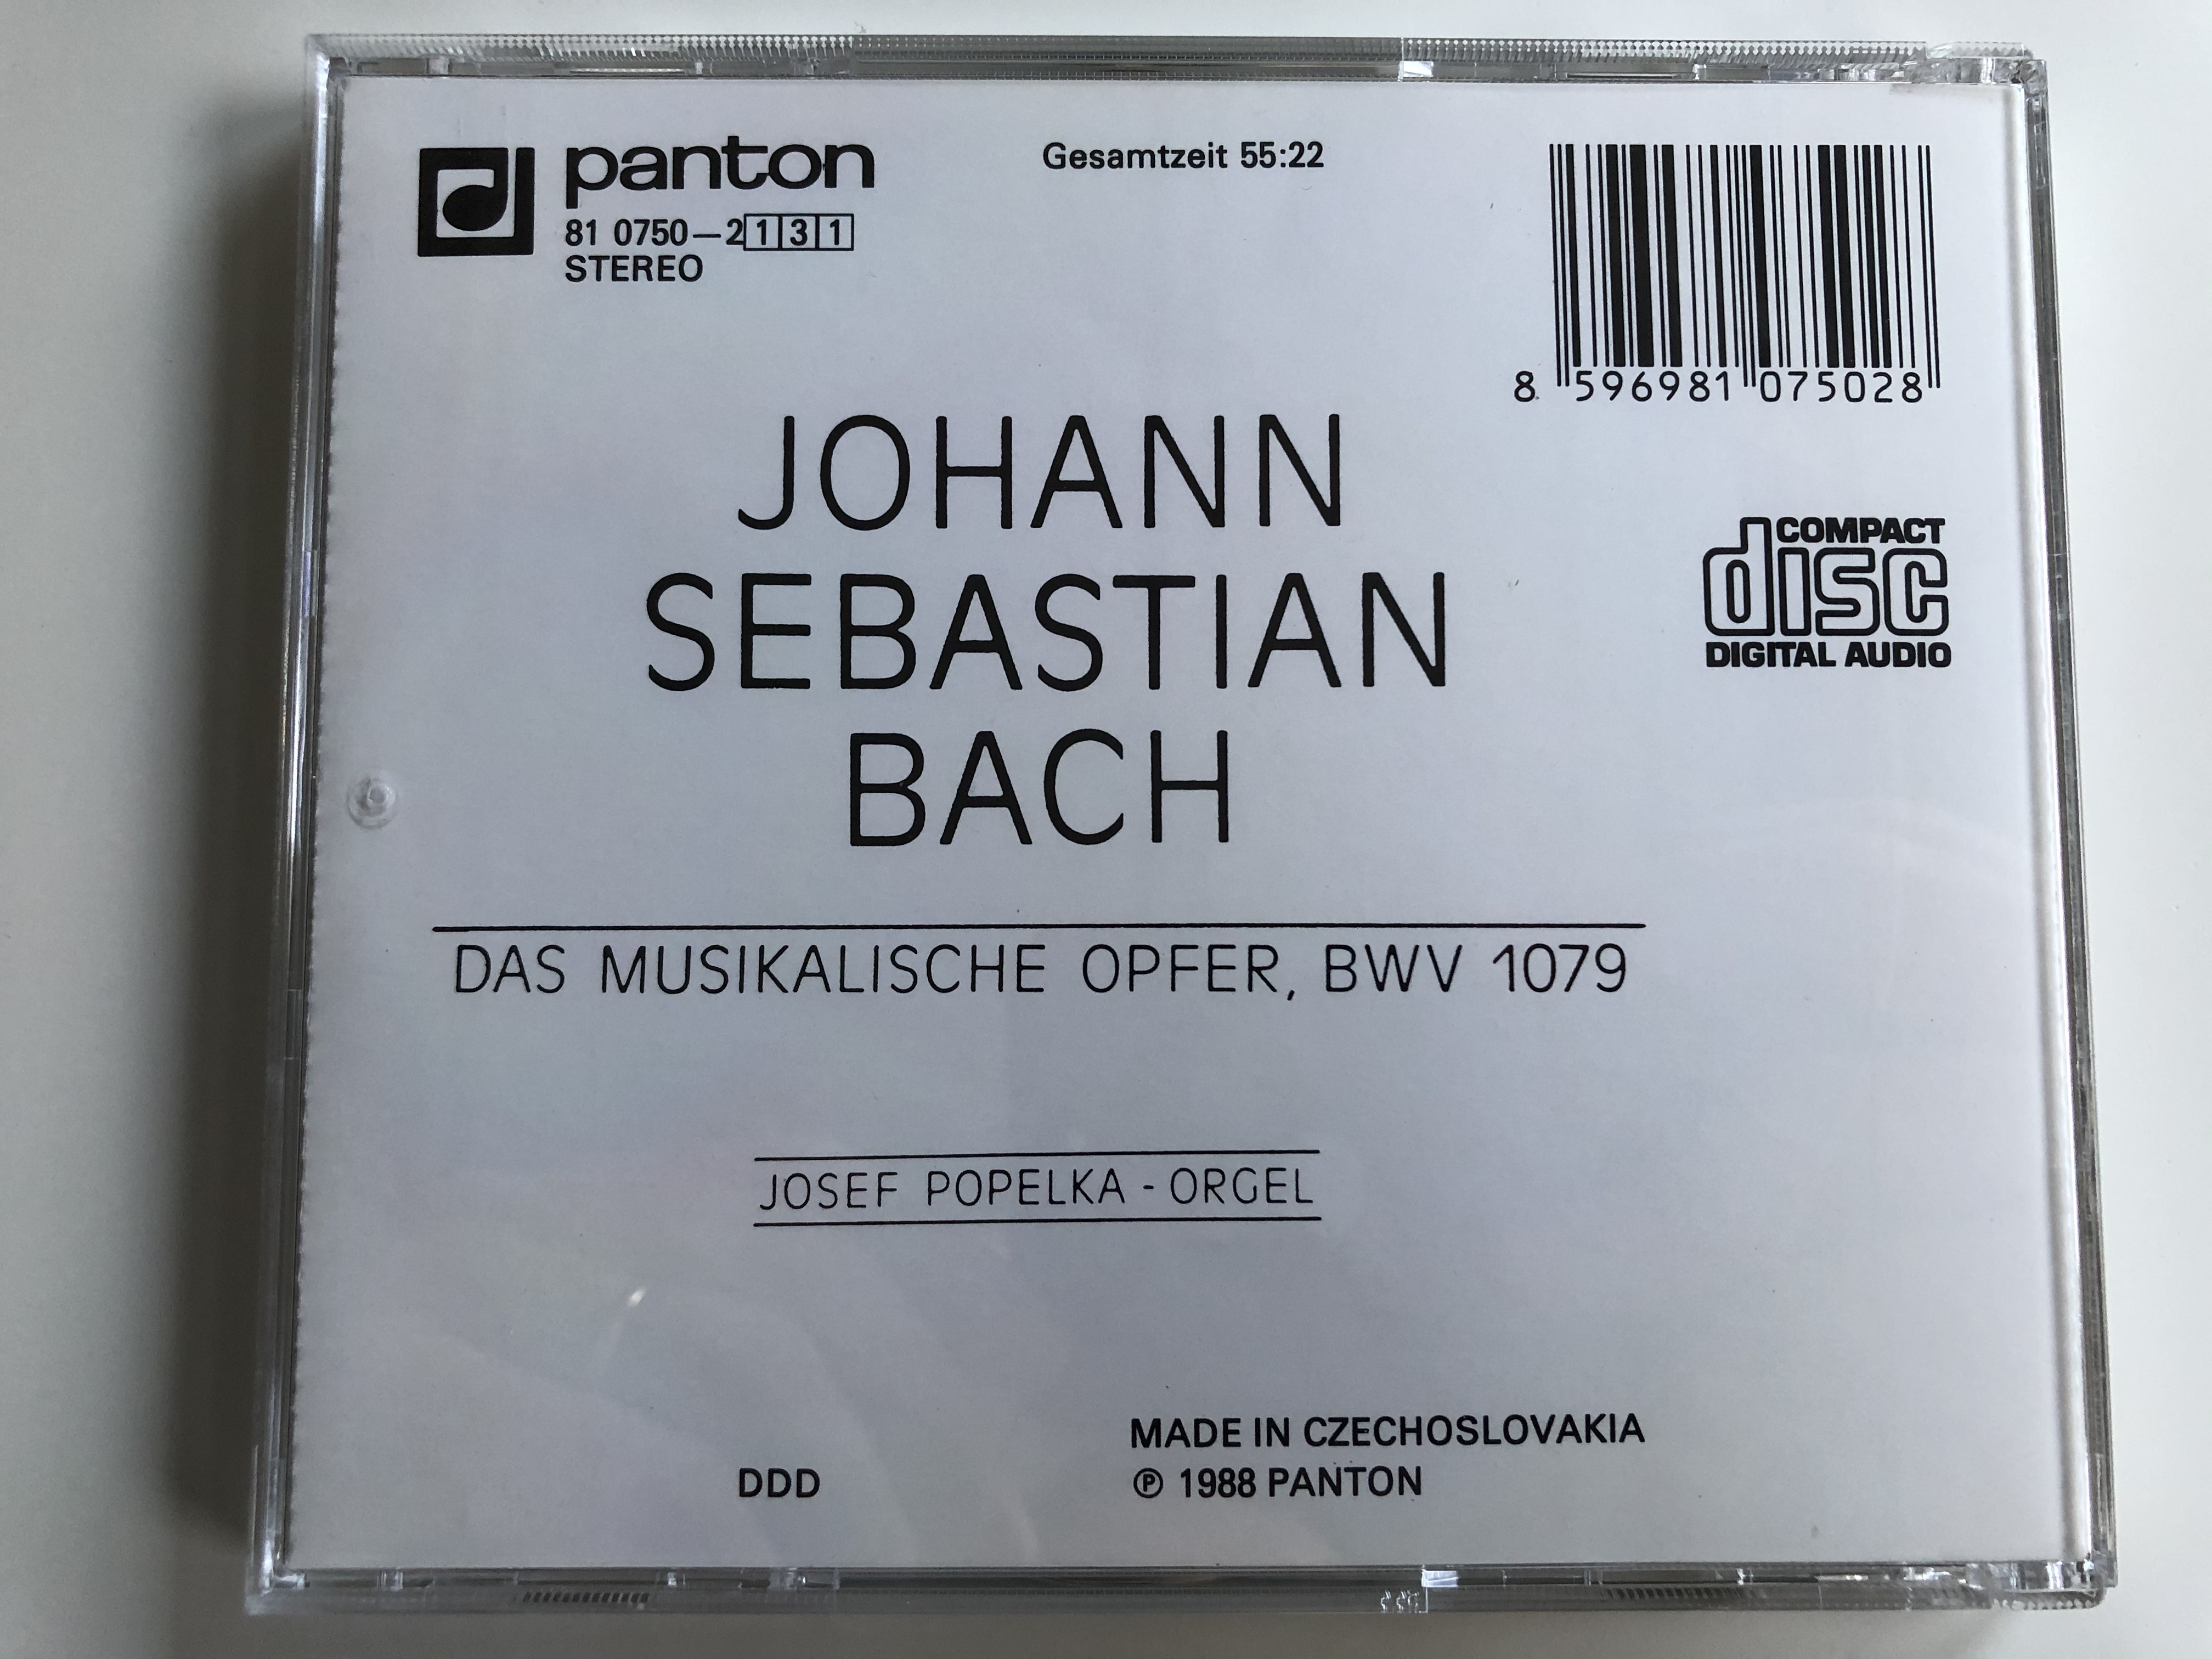 johann-sebastian-bach-josef-popelka-orgel-das-musikalische-opfer-bwv-1079-panton-audio-cd-1988-stereo-81-0750-2131-4-.jpg